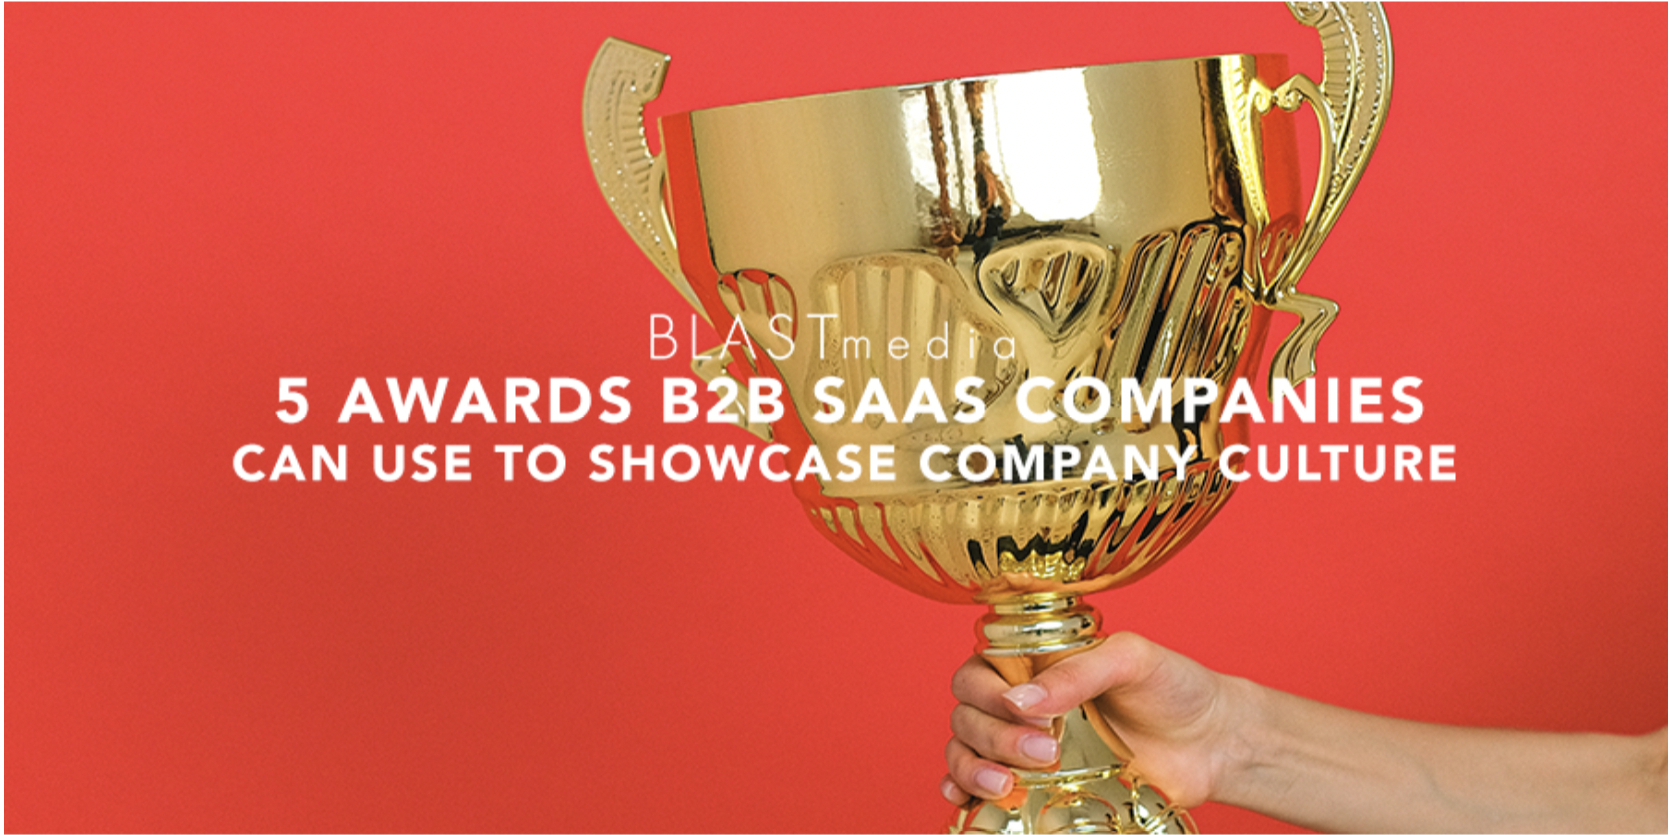 5 Awards B2B SaaS Companies Can Use to Showcase Company Culture